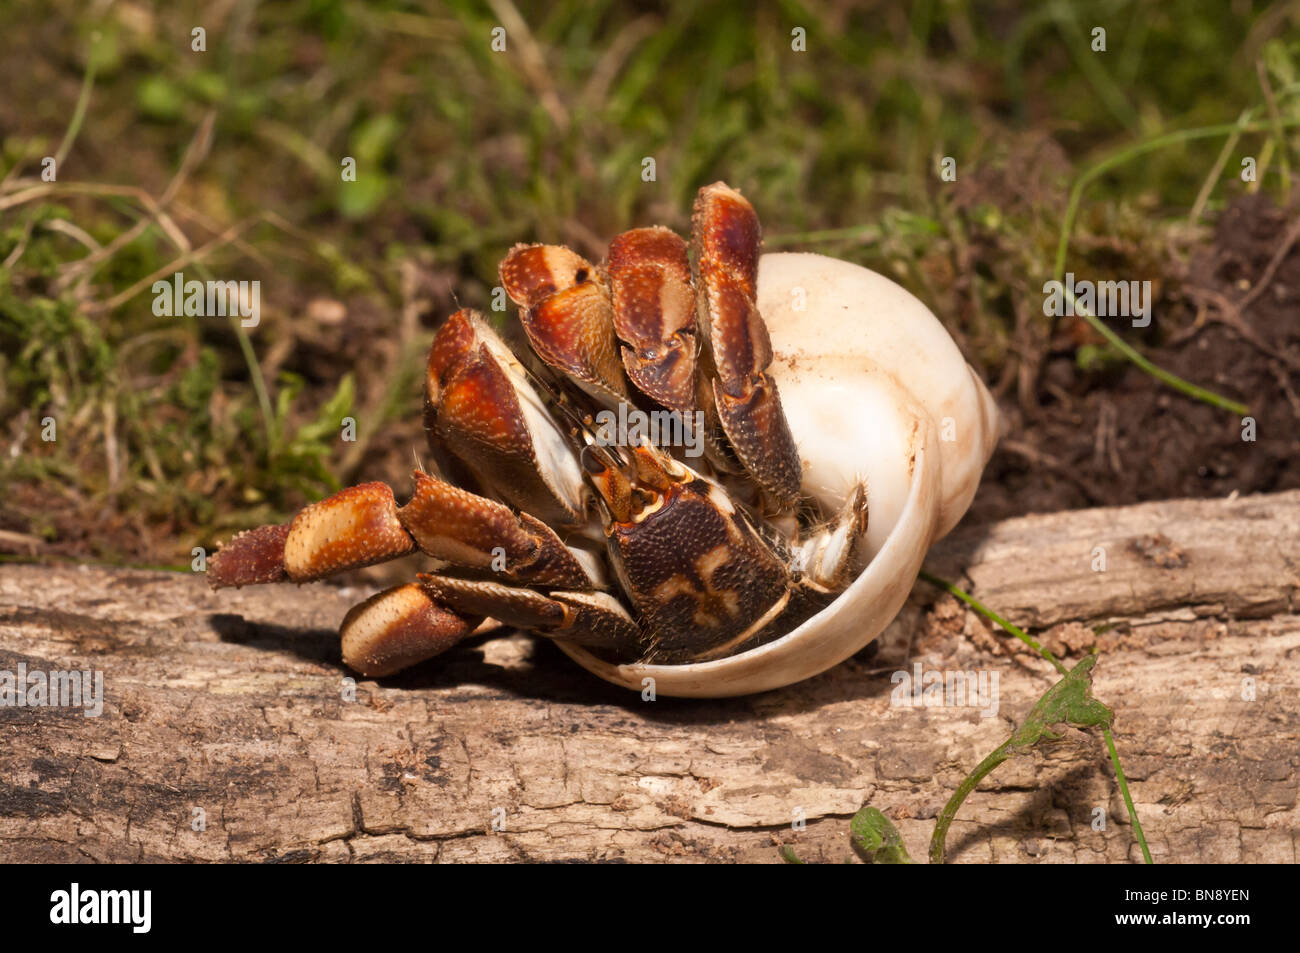 Caribbean hermit crab, West Atlantic crab, Coenobita clypeatus,  native to the west Atlantic, Bahamas, Caribbean Sea Stock Photo